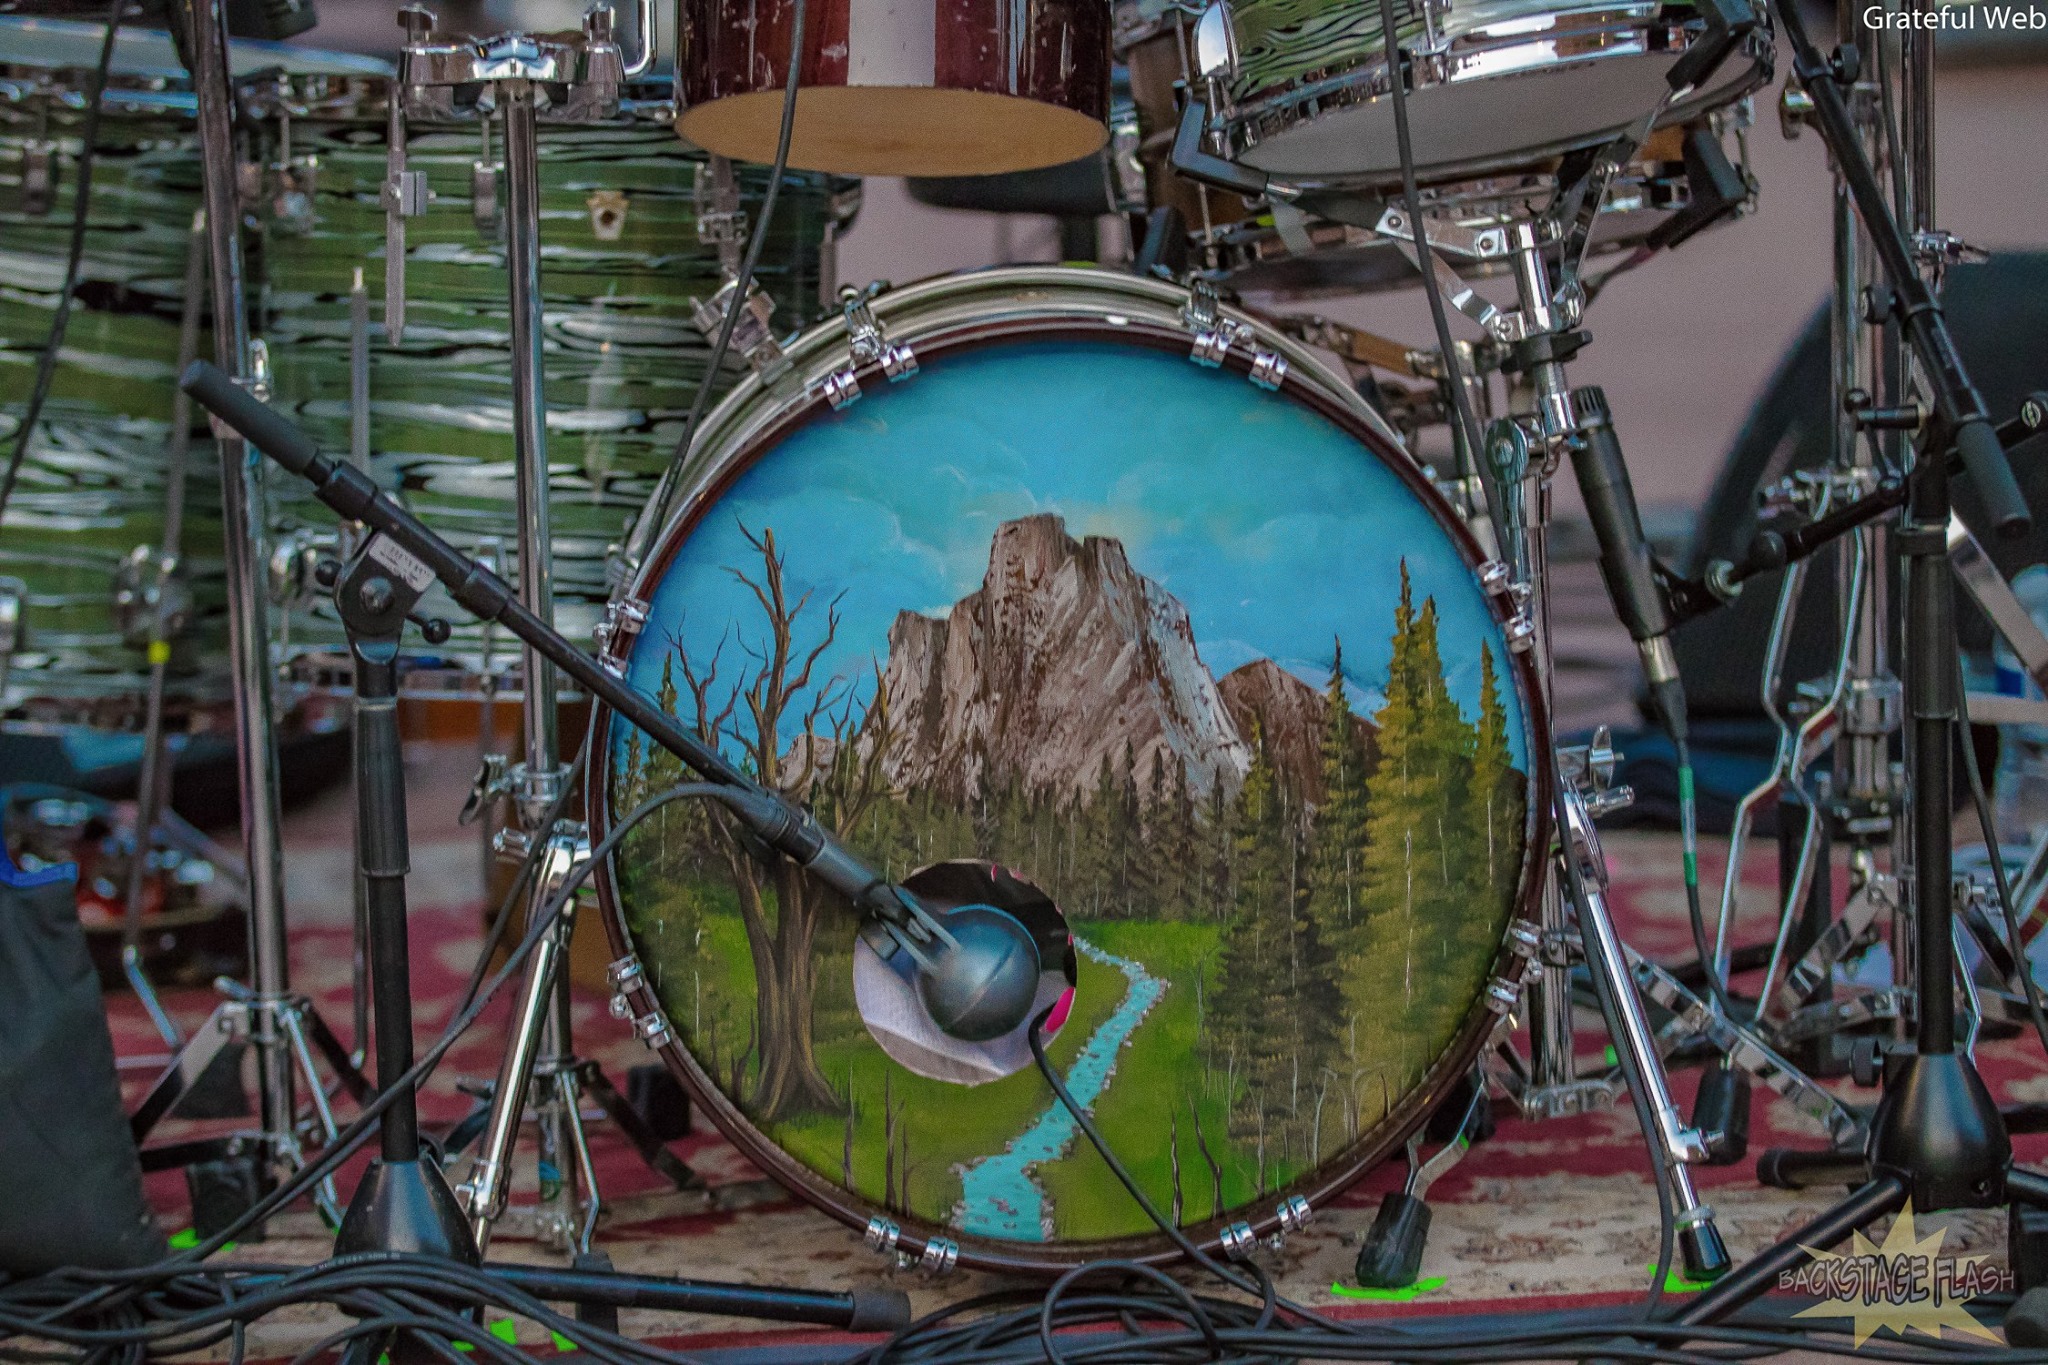 Joe Russo's drum kit